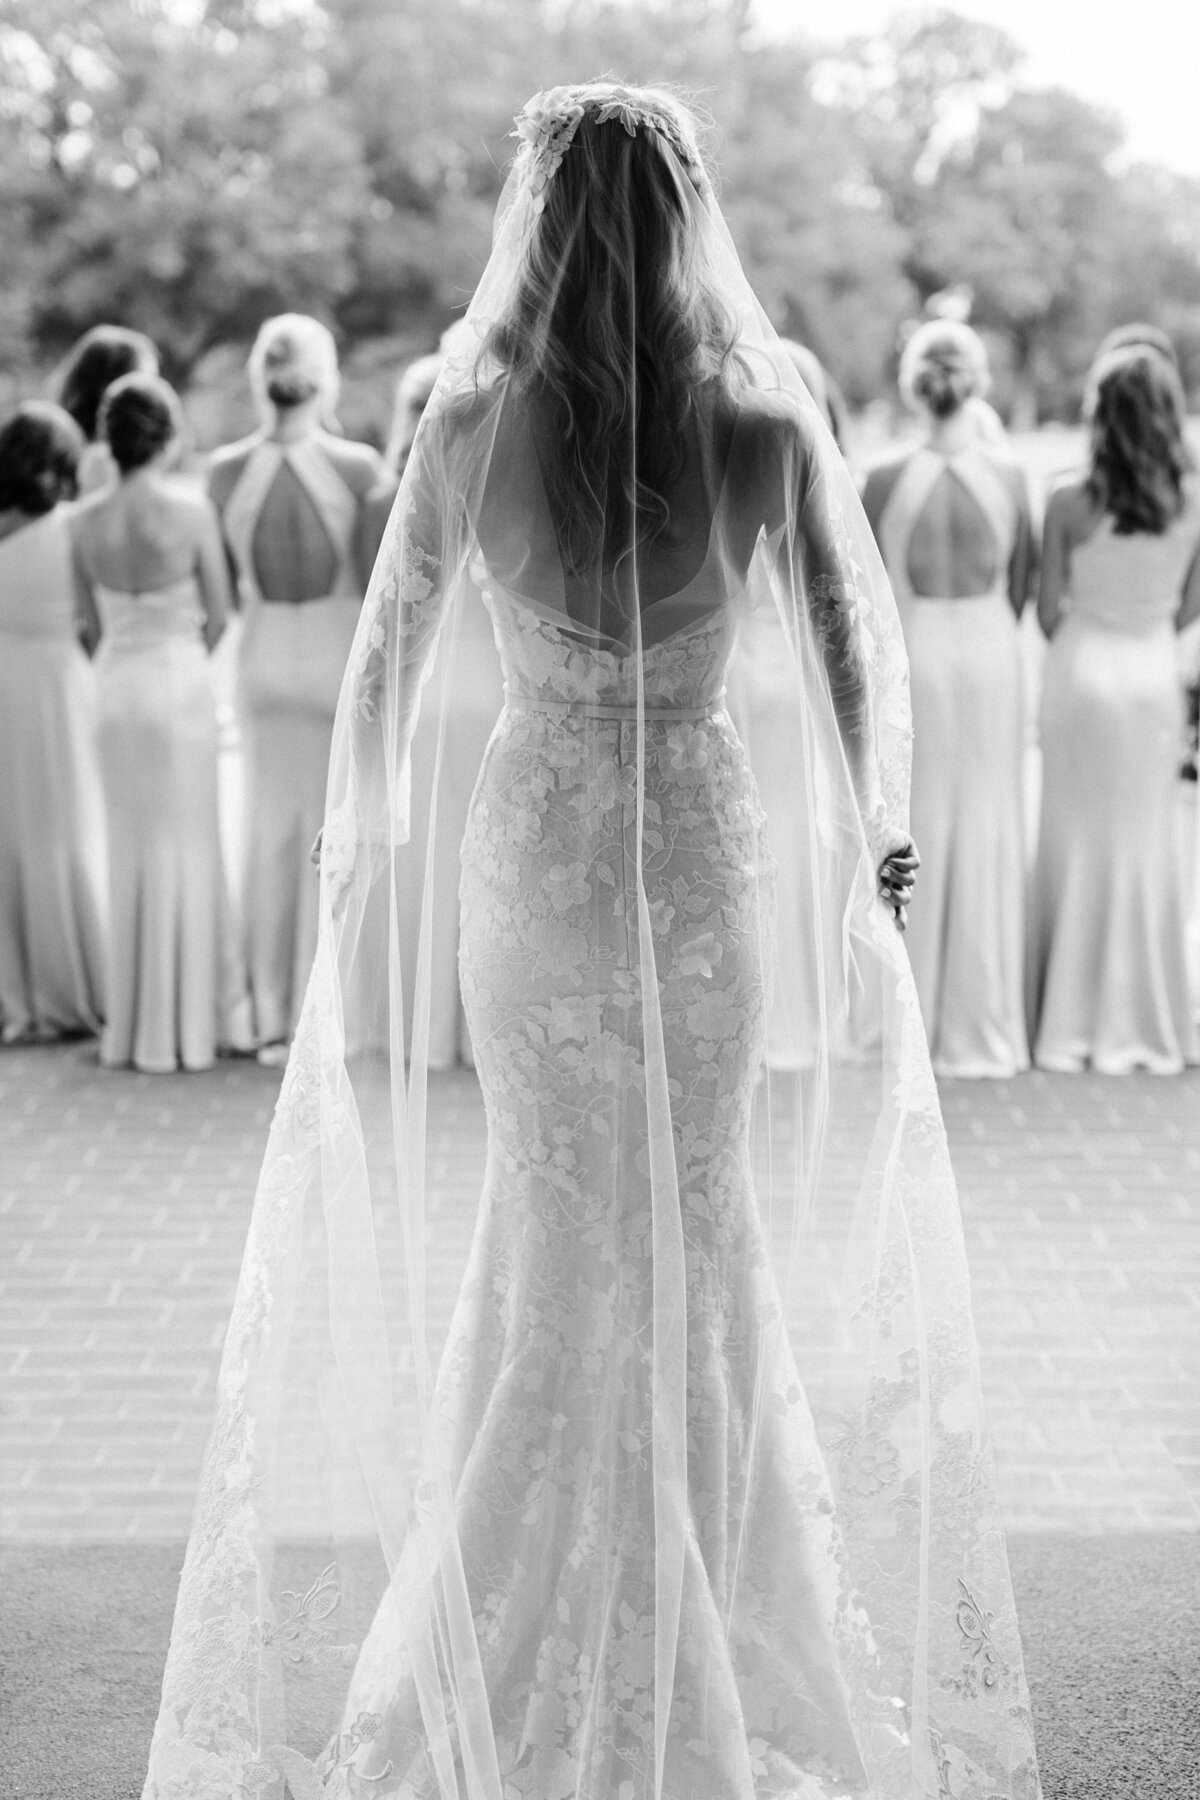 A wedding portrait of the bride standing behind her bridesmaids in her wedding dress